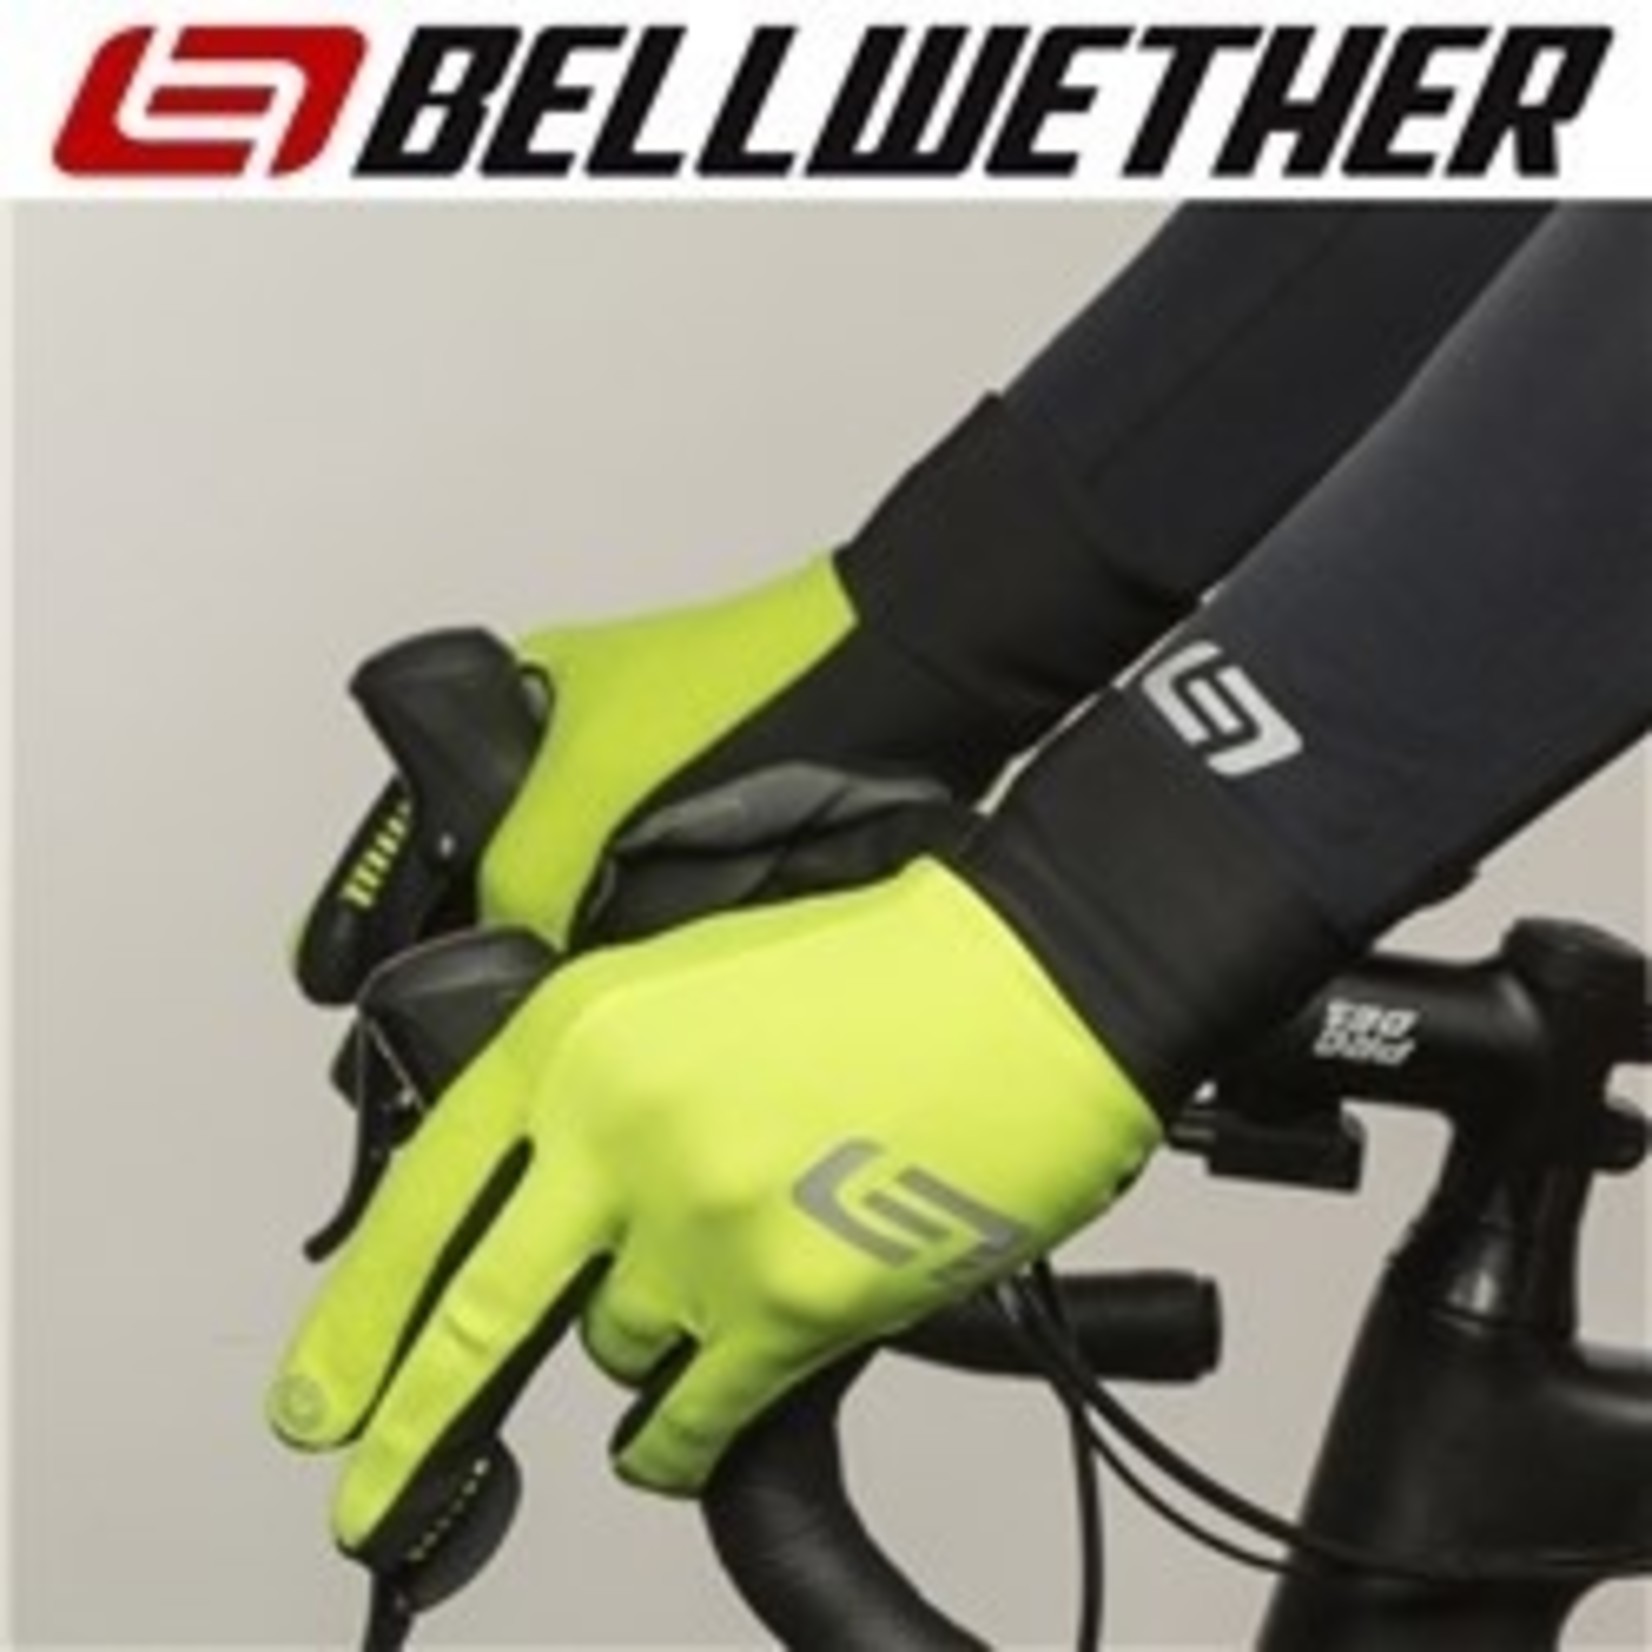 Bellwether Bellwether Bike/Cycling Glove - Climate Control Glove - Hi-Vis